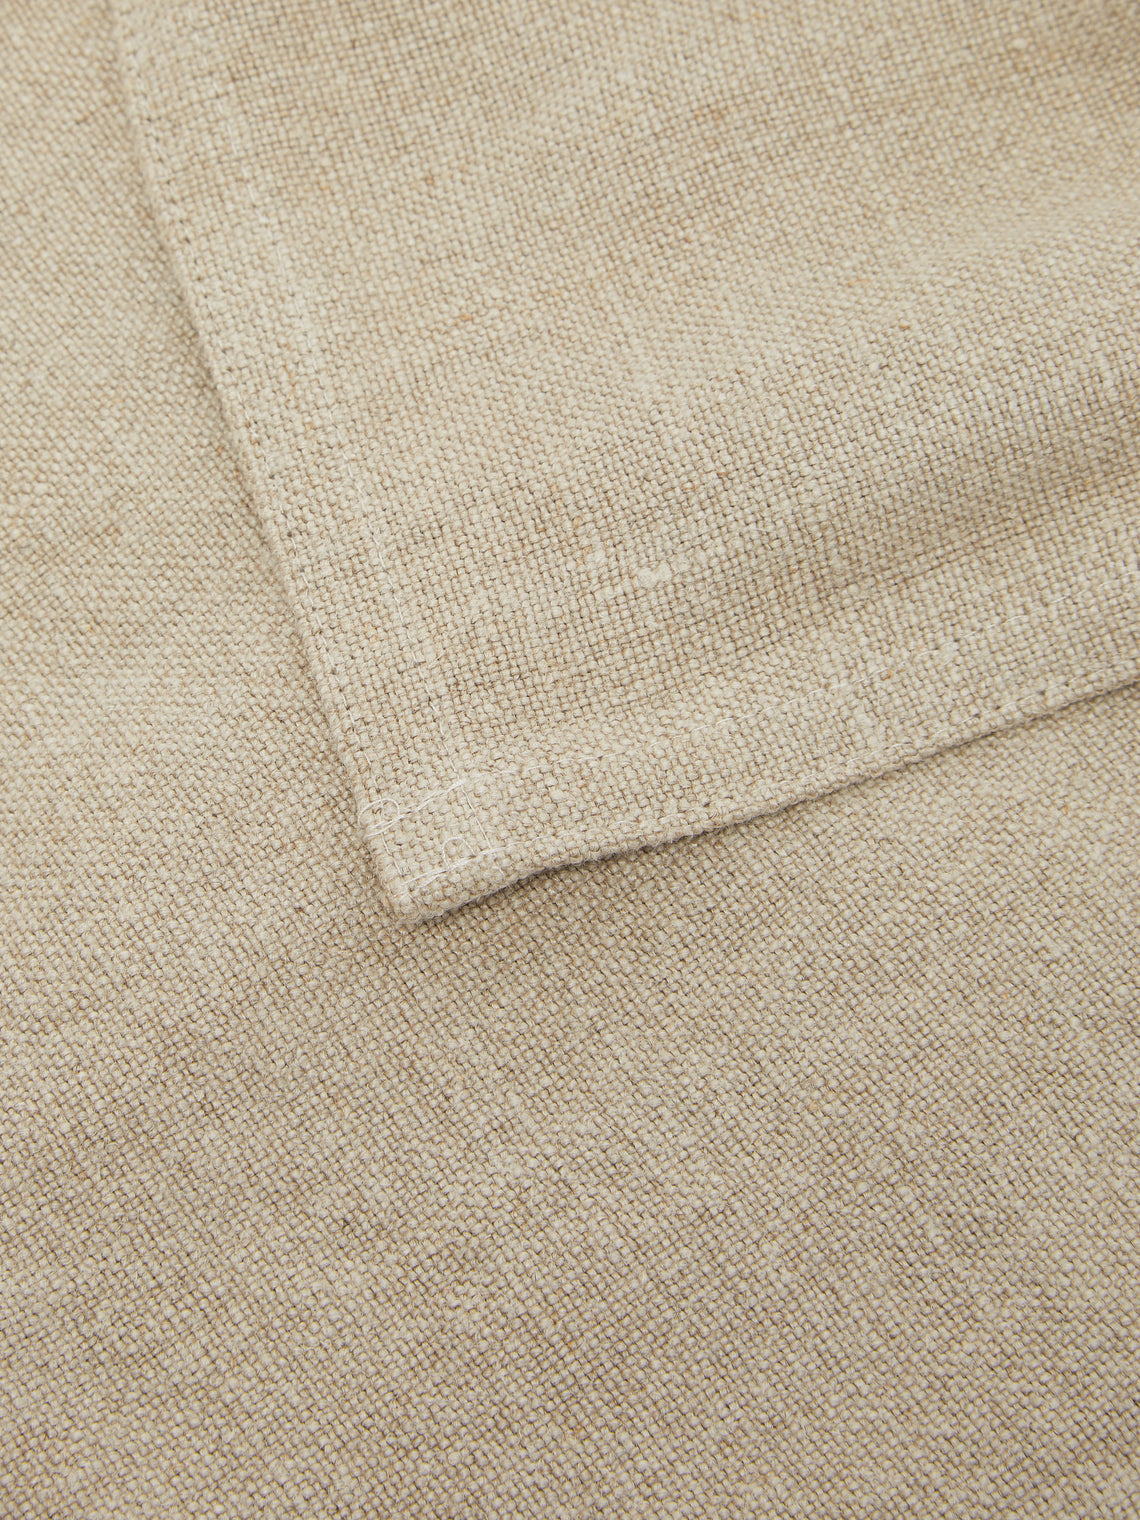 Libeco - Hudson Belgian Linen Tablecloth -  - ABASK